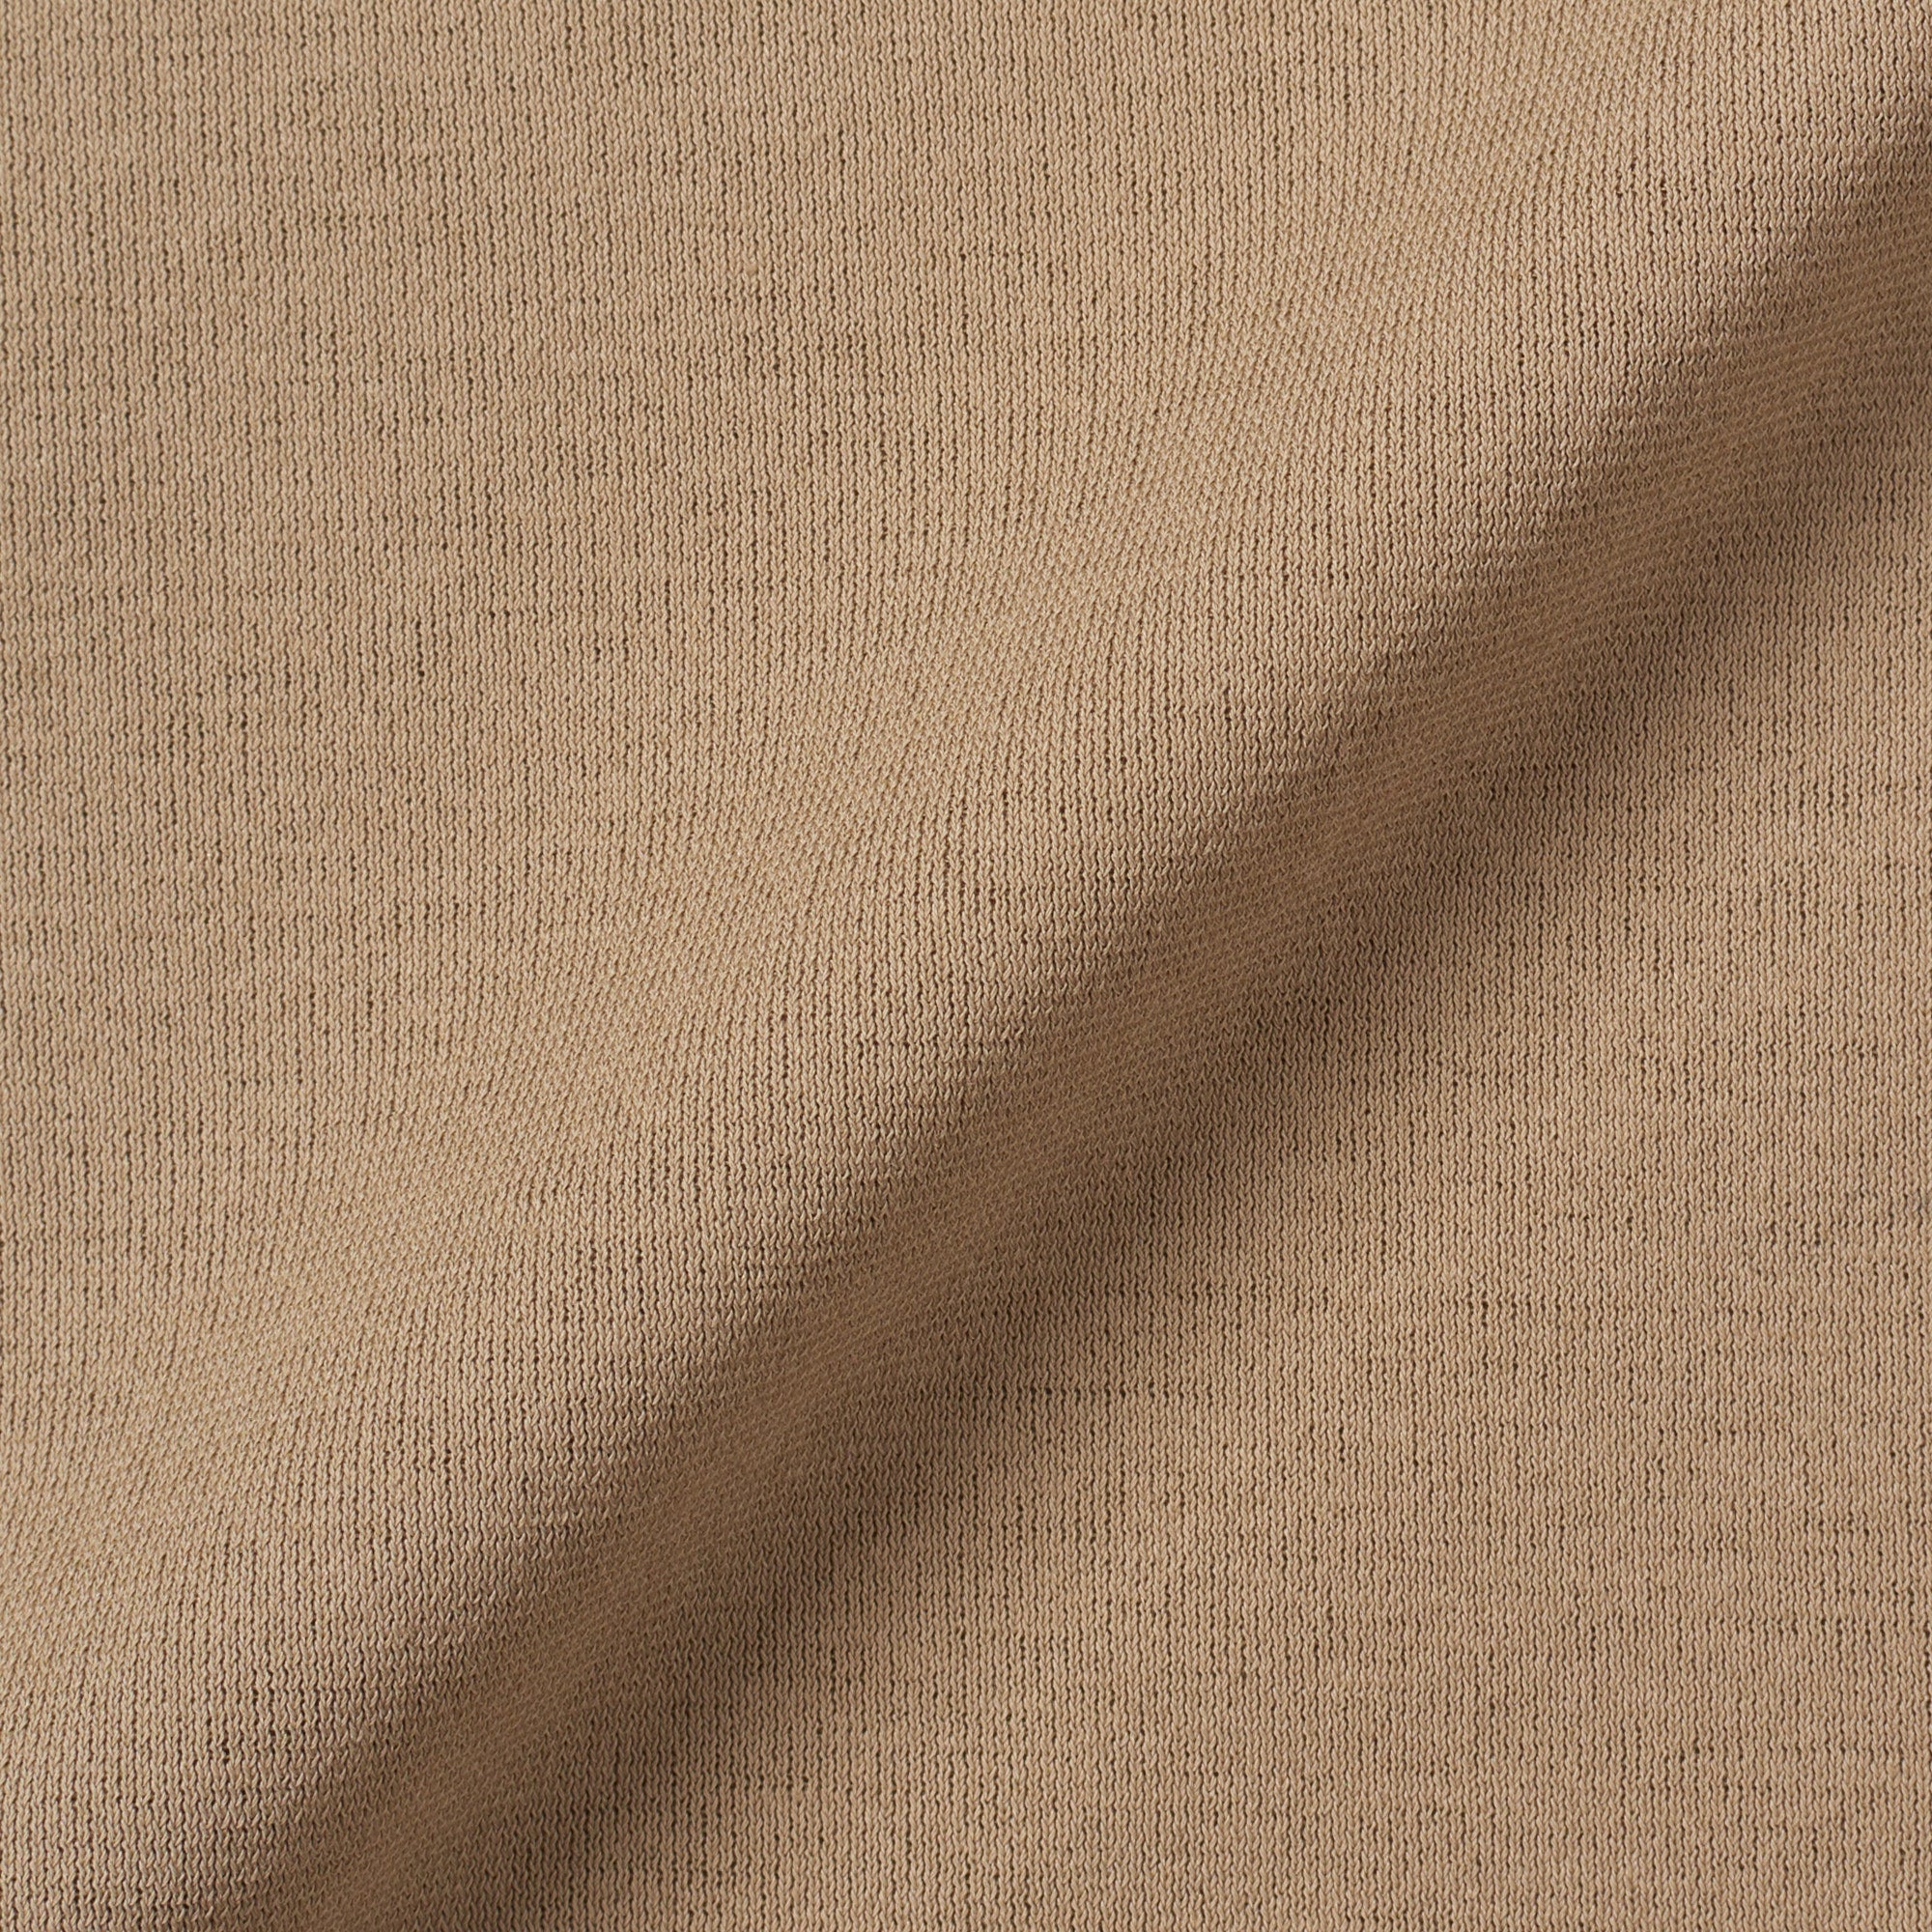 Kiton KIRED "Baciomc" Tan Exclusive Crepe Cotton Short Sleeve T-Shirt Slim 2023 KIRED